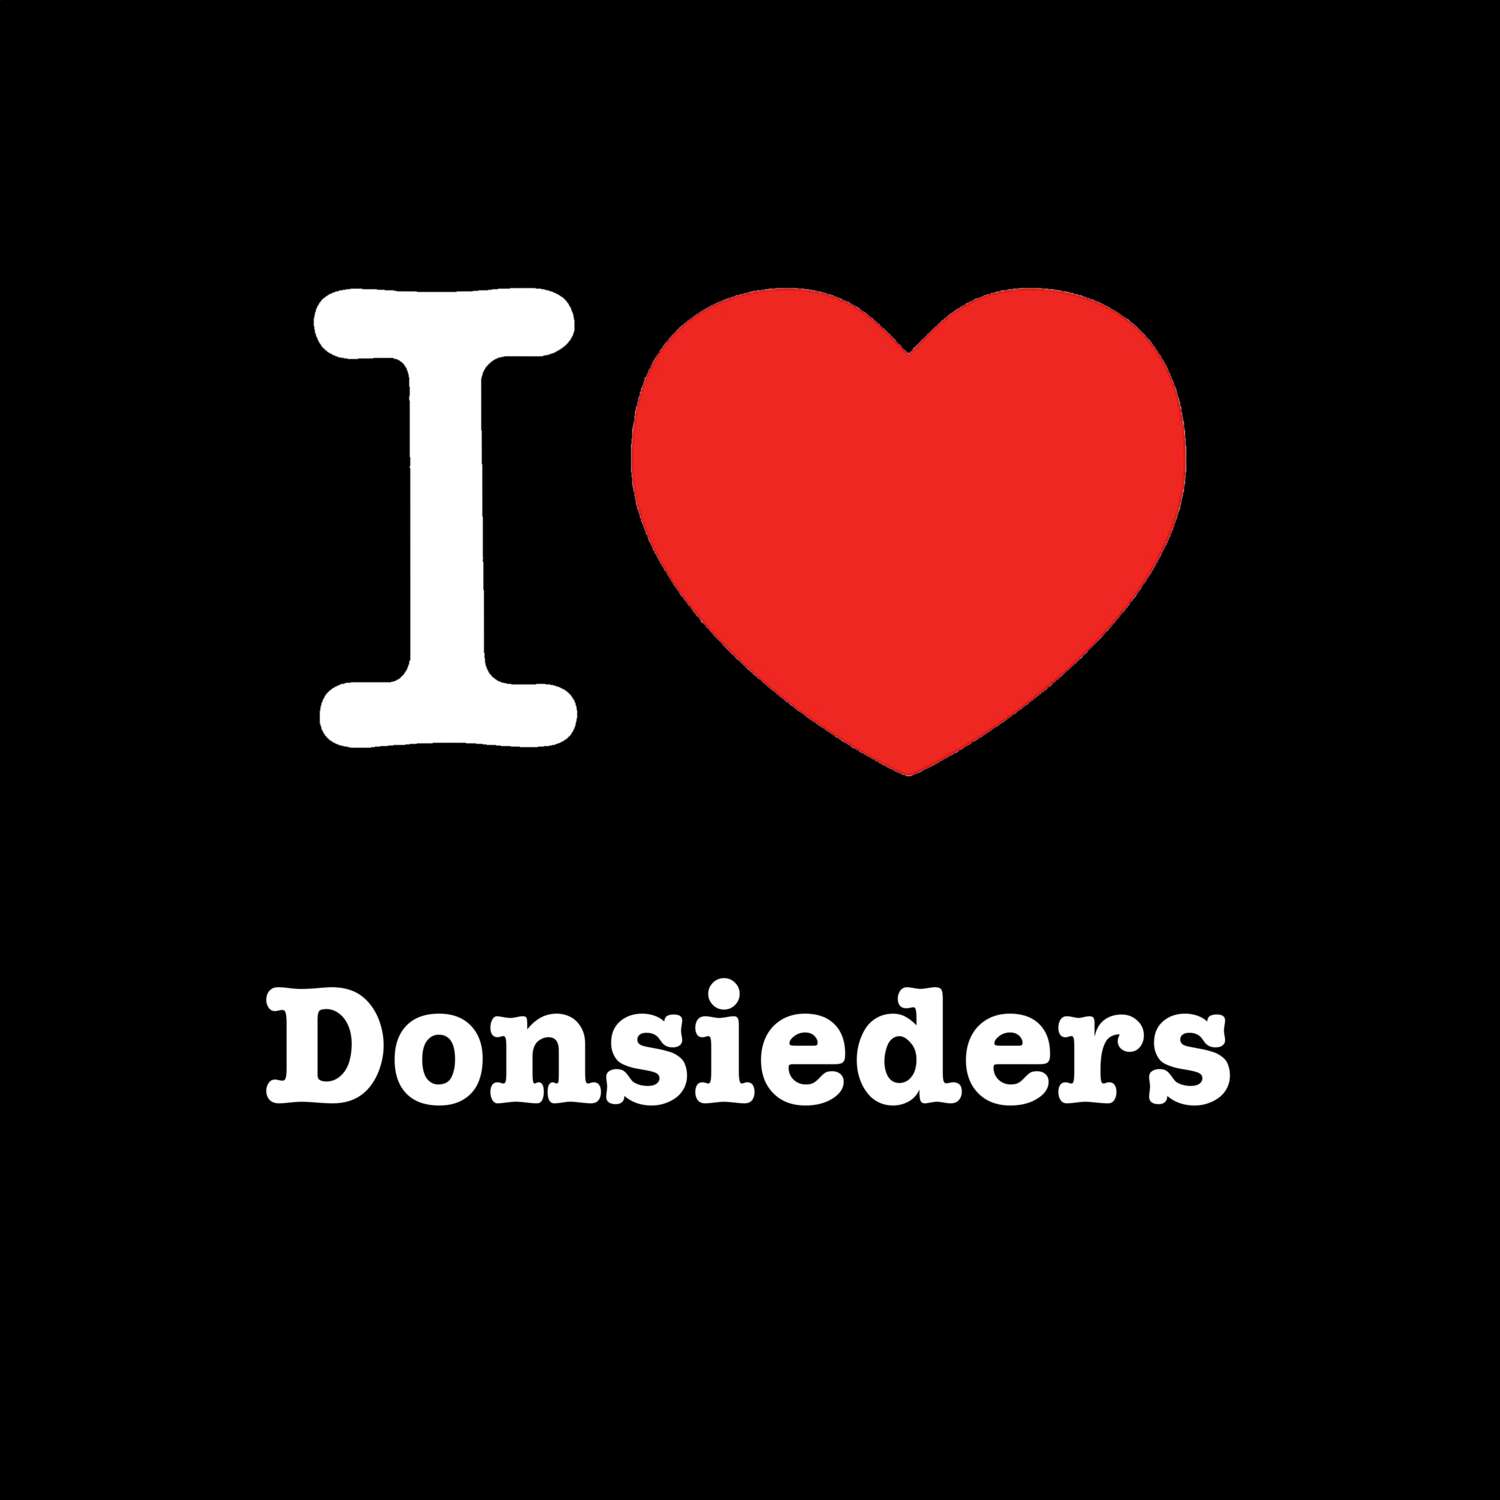 Donsieders T-Shirt »I love«